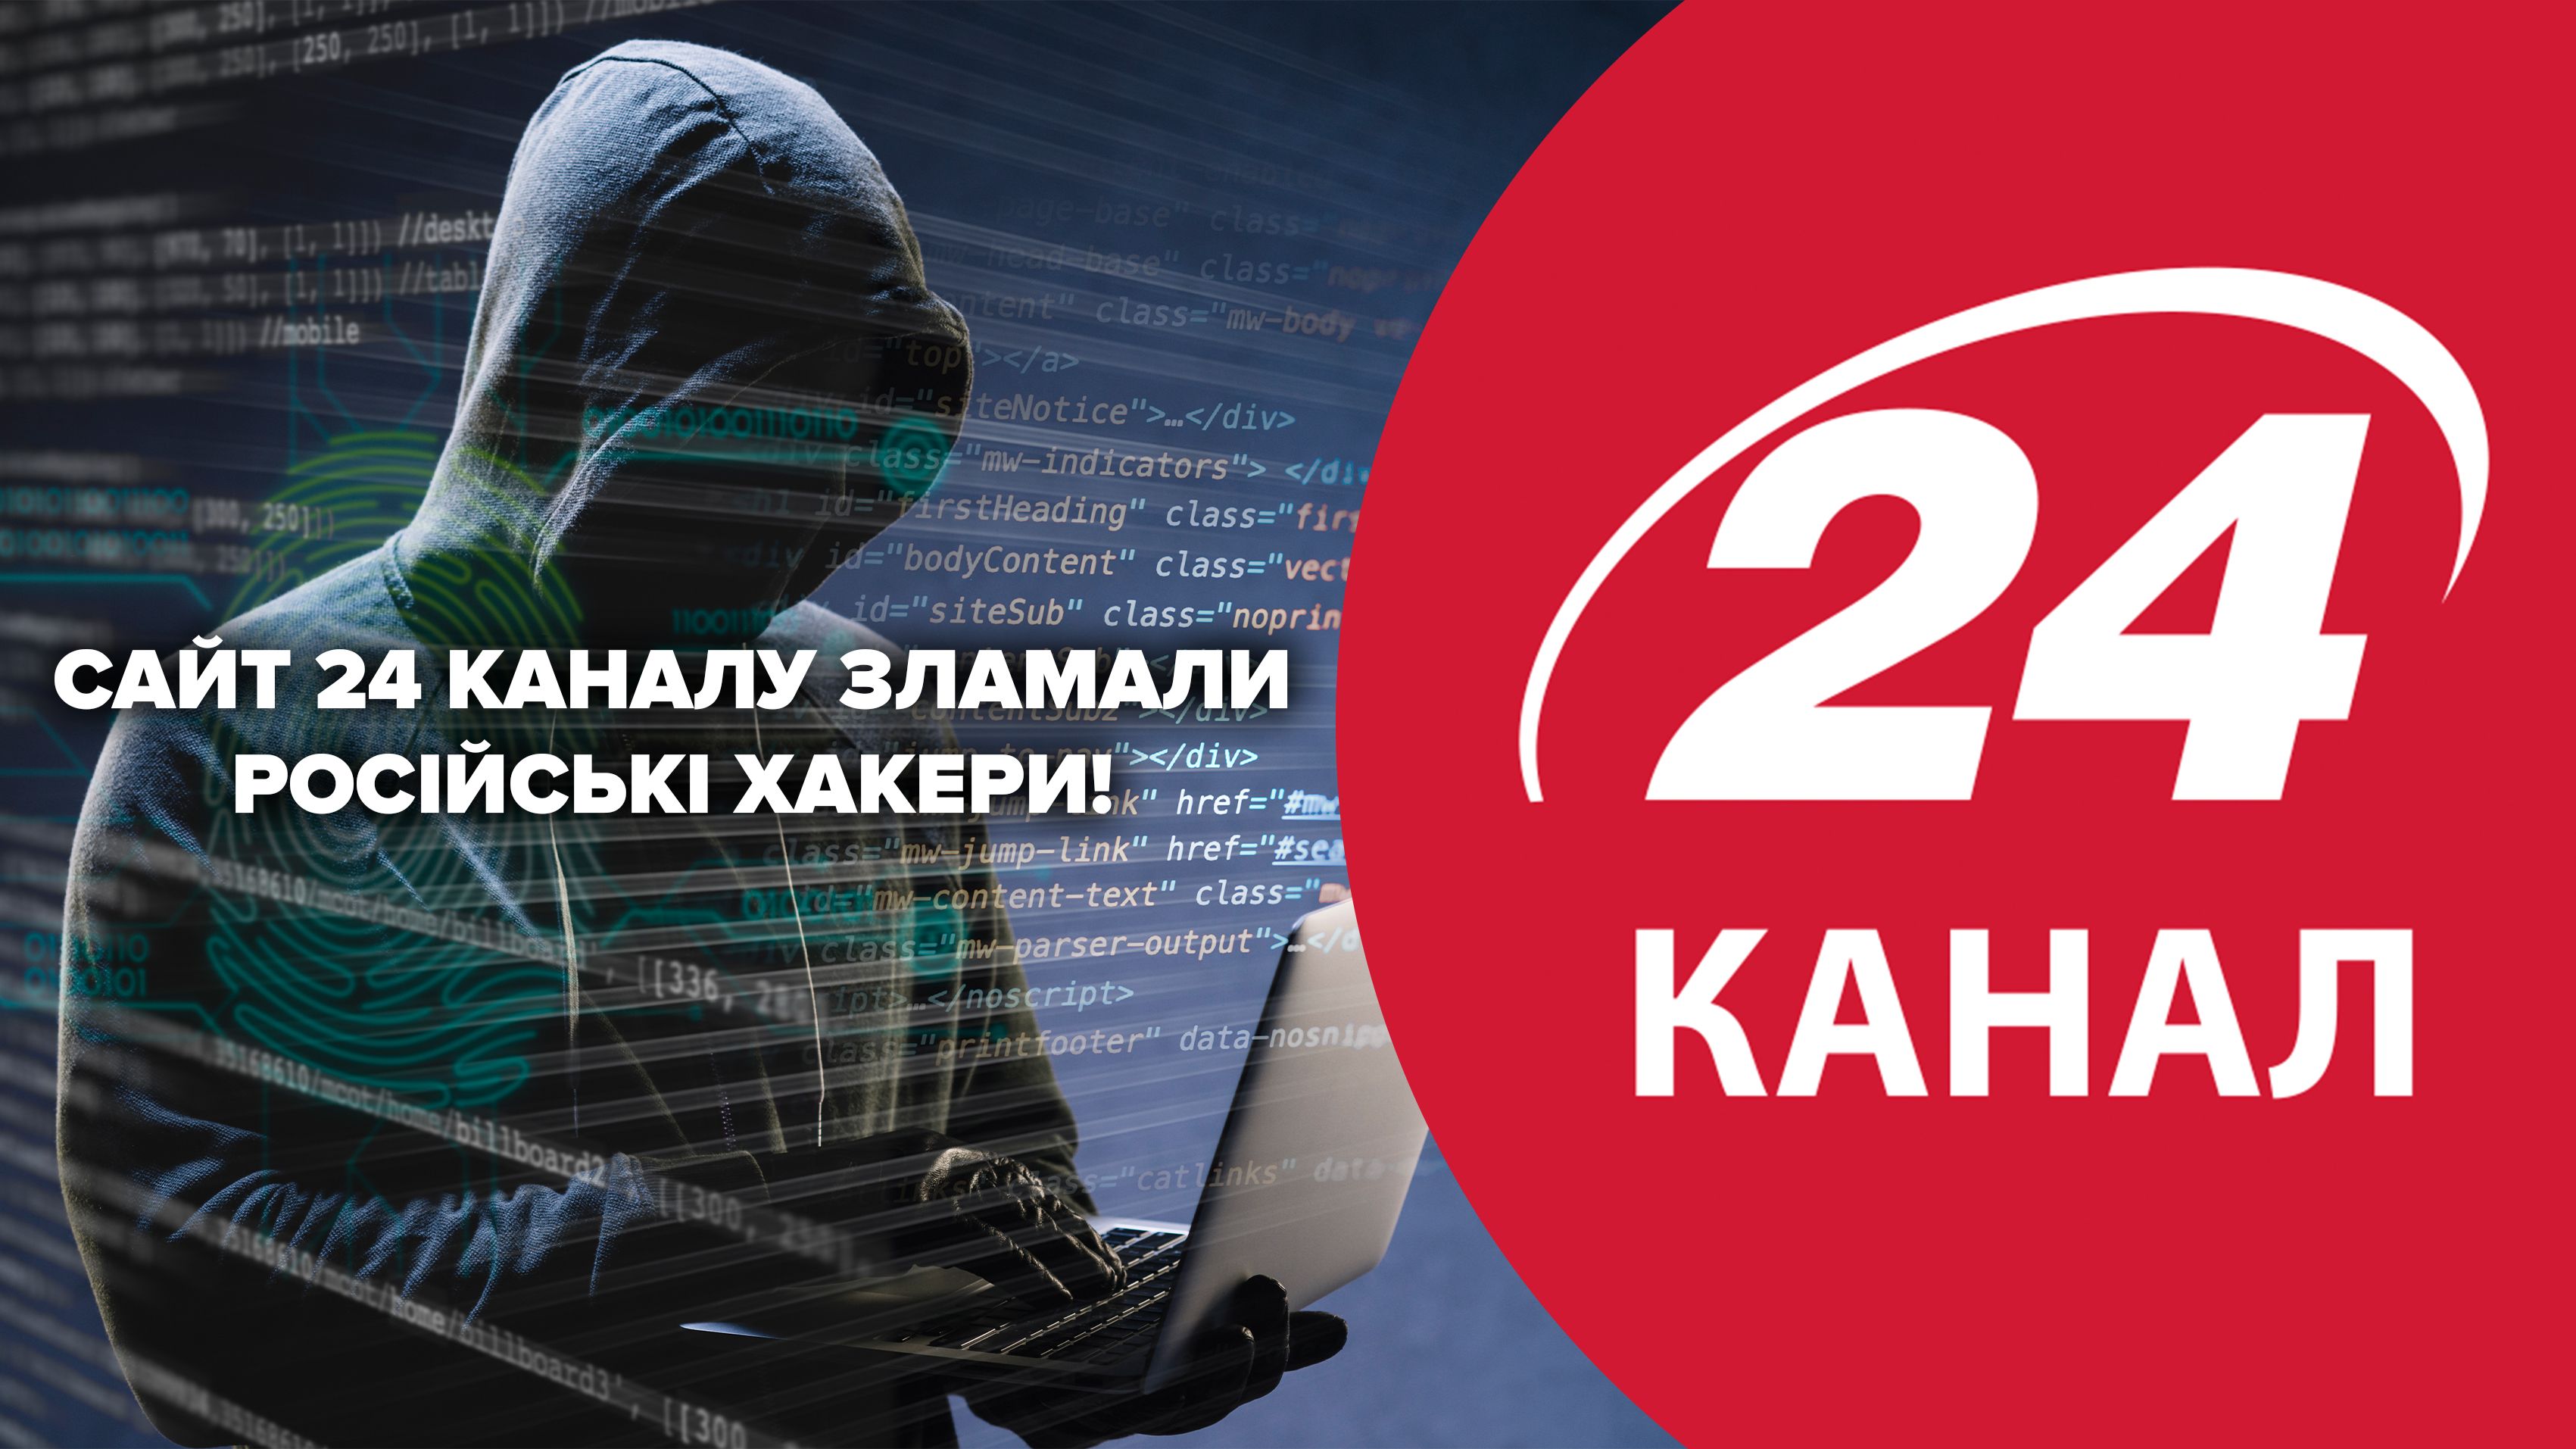 Сайт 24 Каналу зламали російські хакери